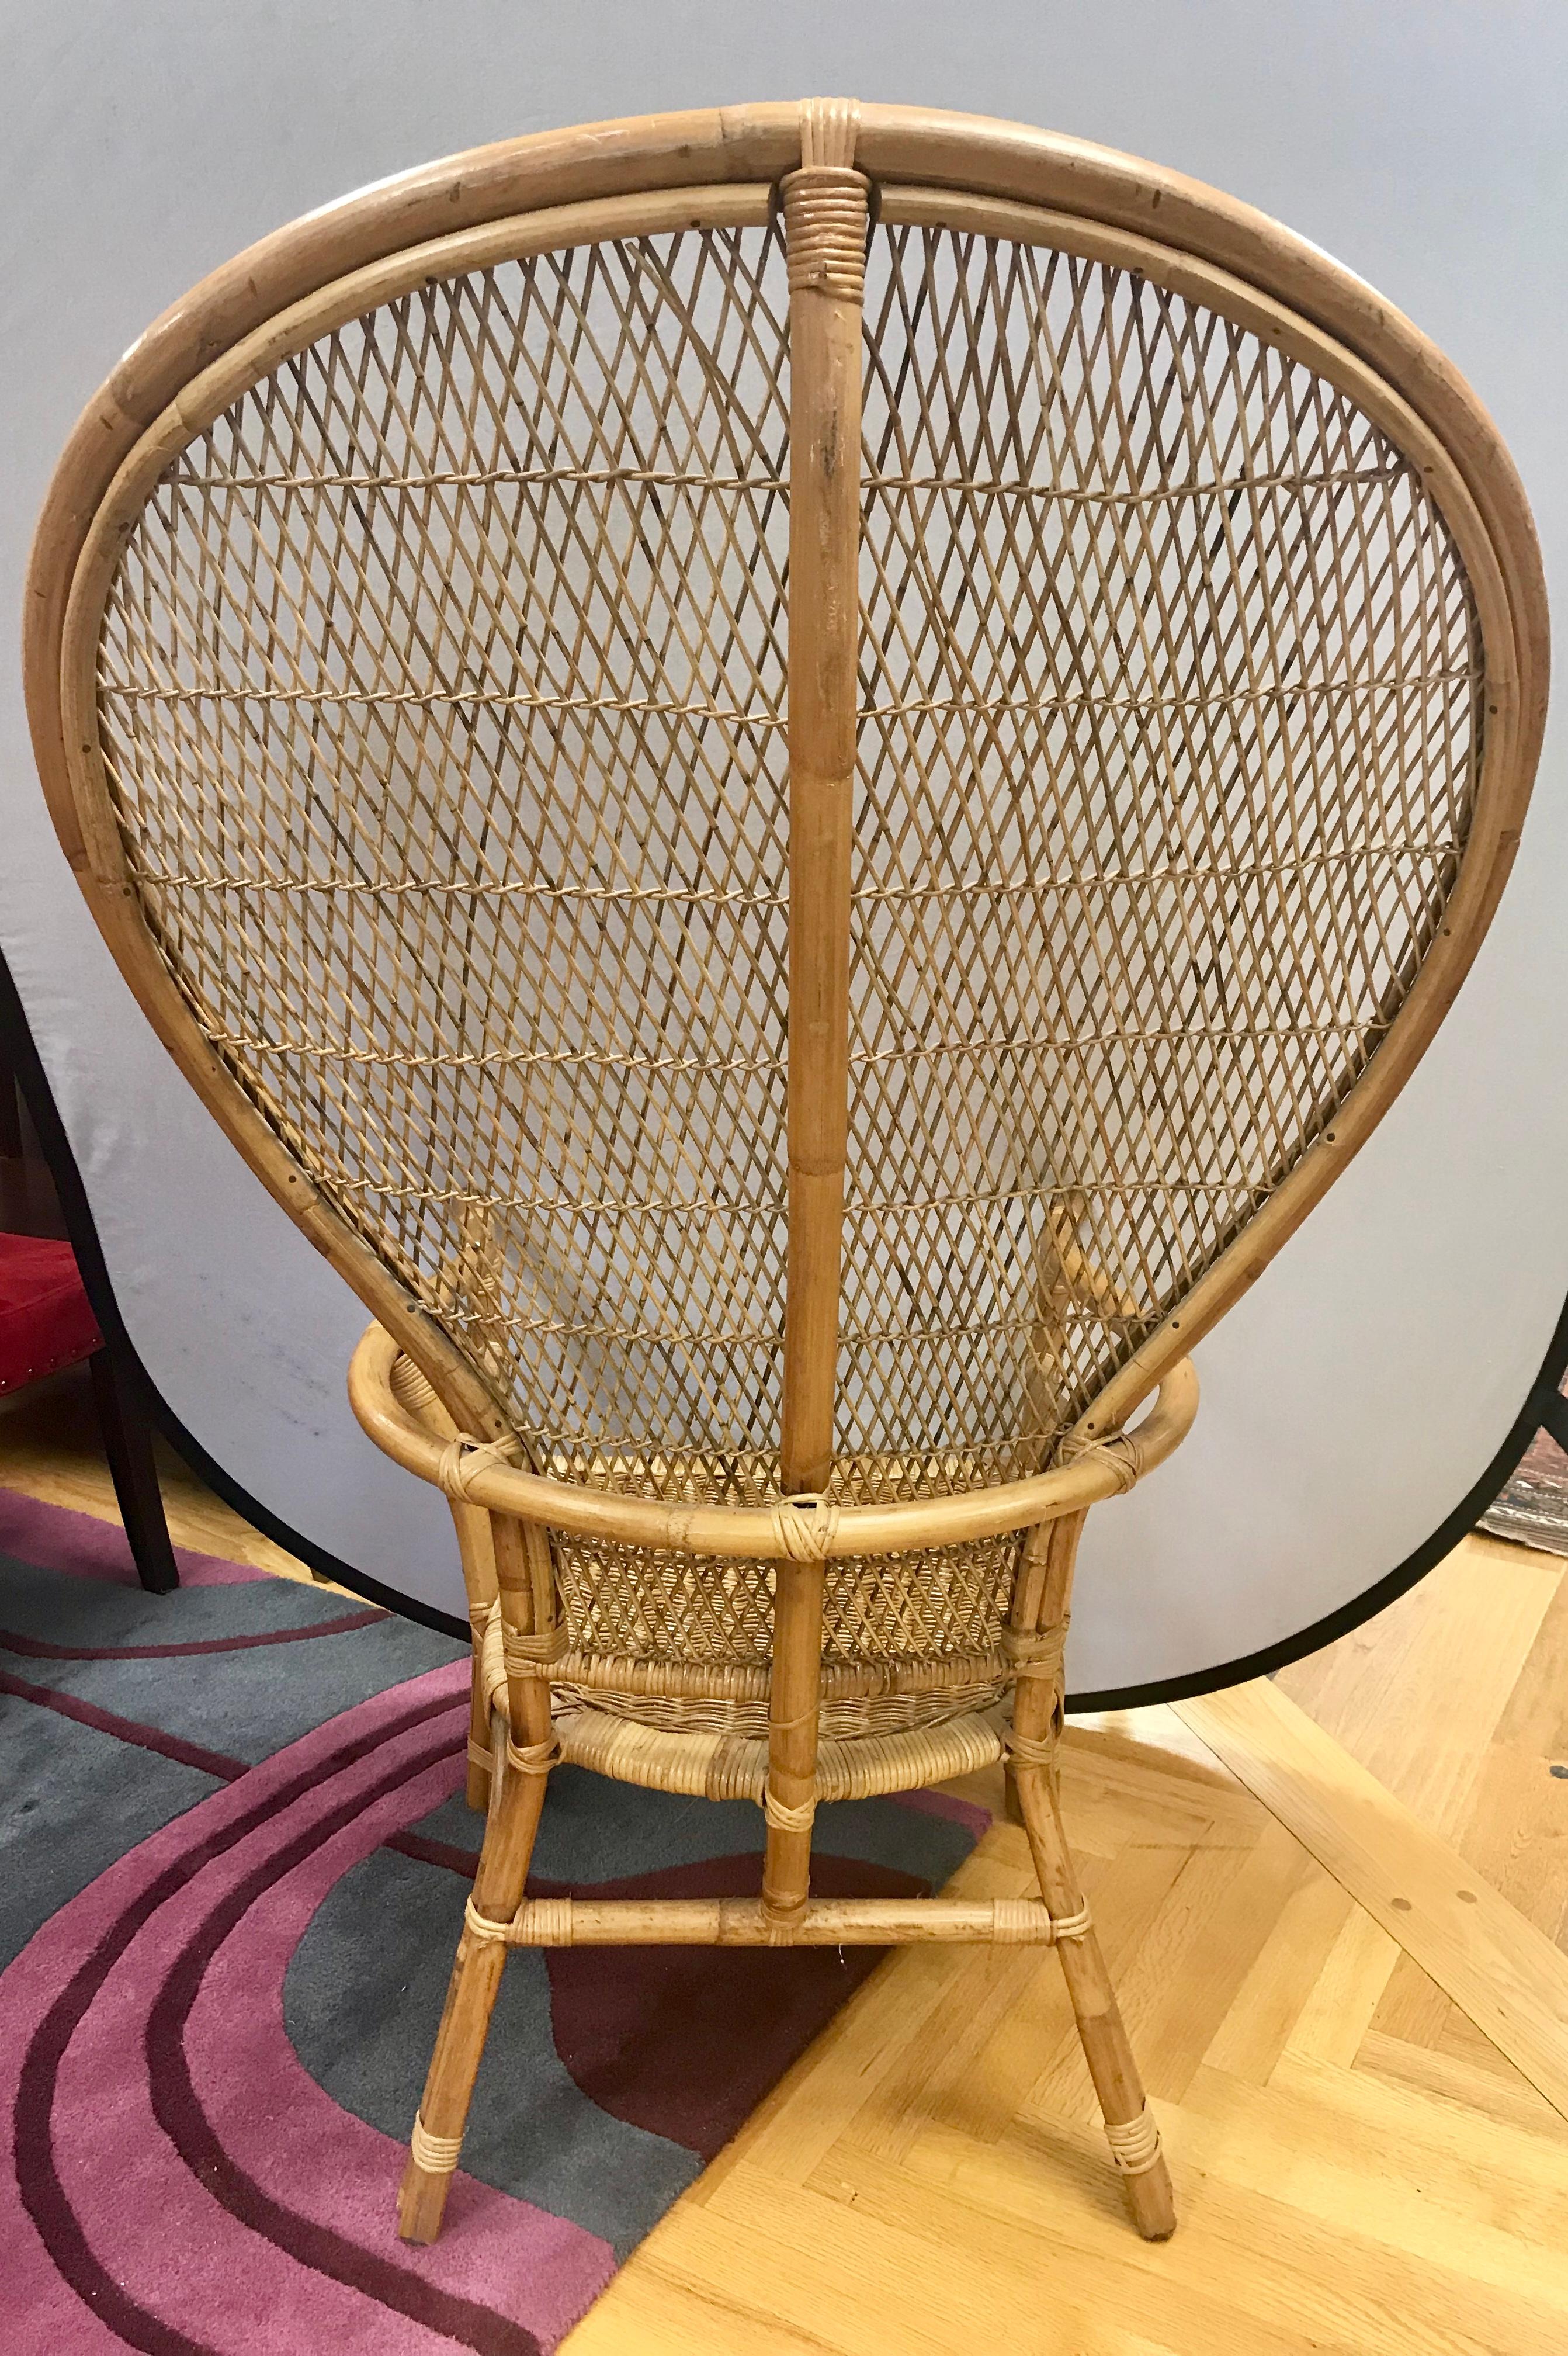 American Mid-Century Modern Wicker Rattan Peacock Chair